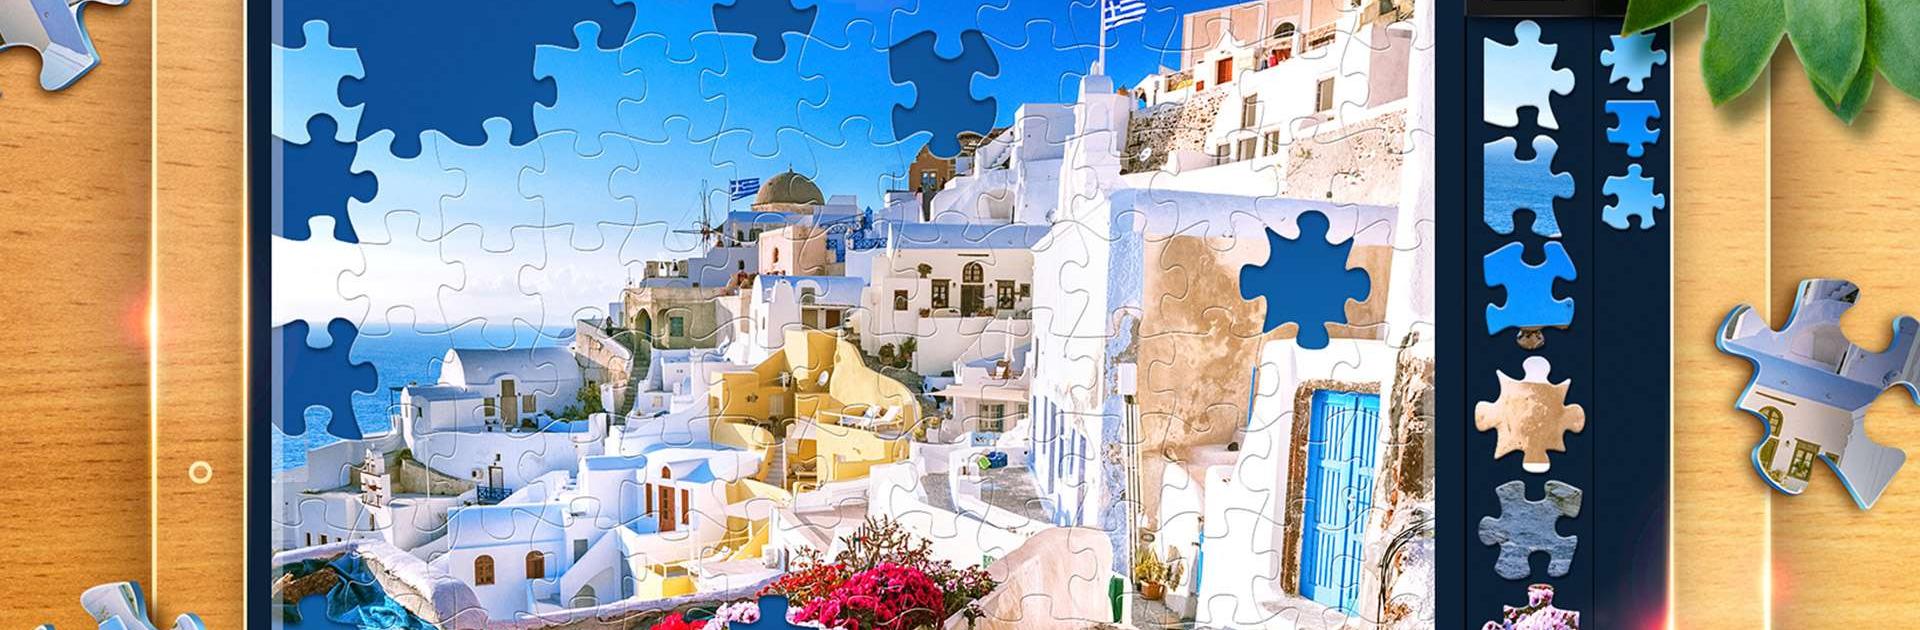 Magic Jigsaw Puzzles